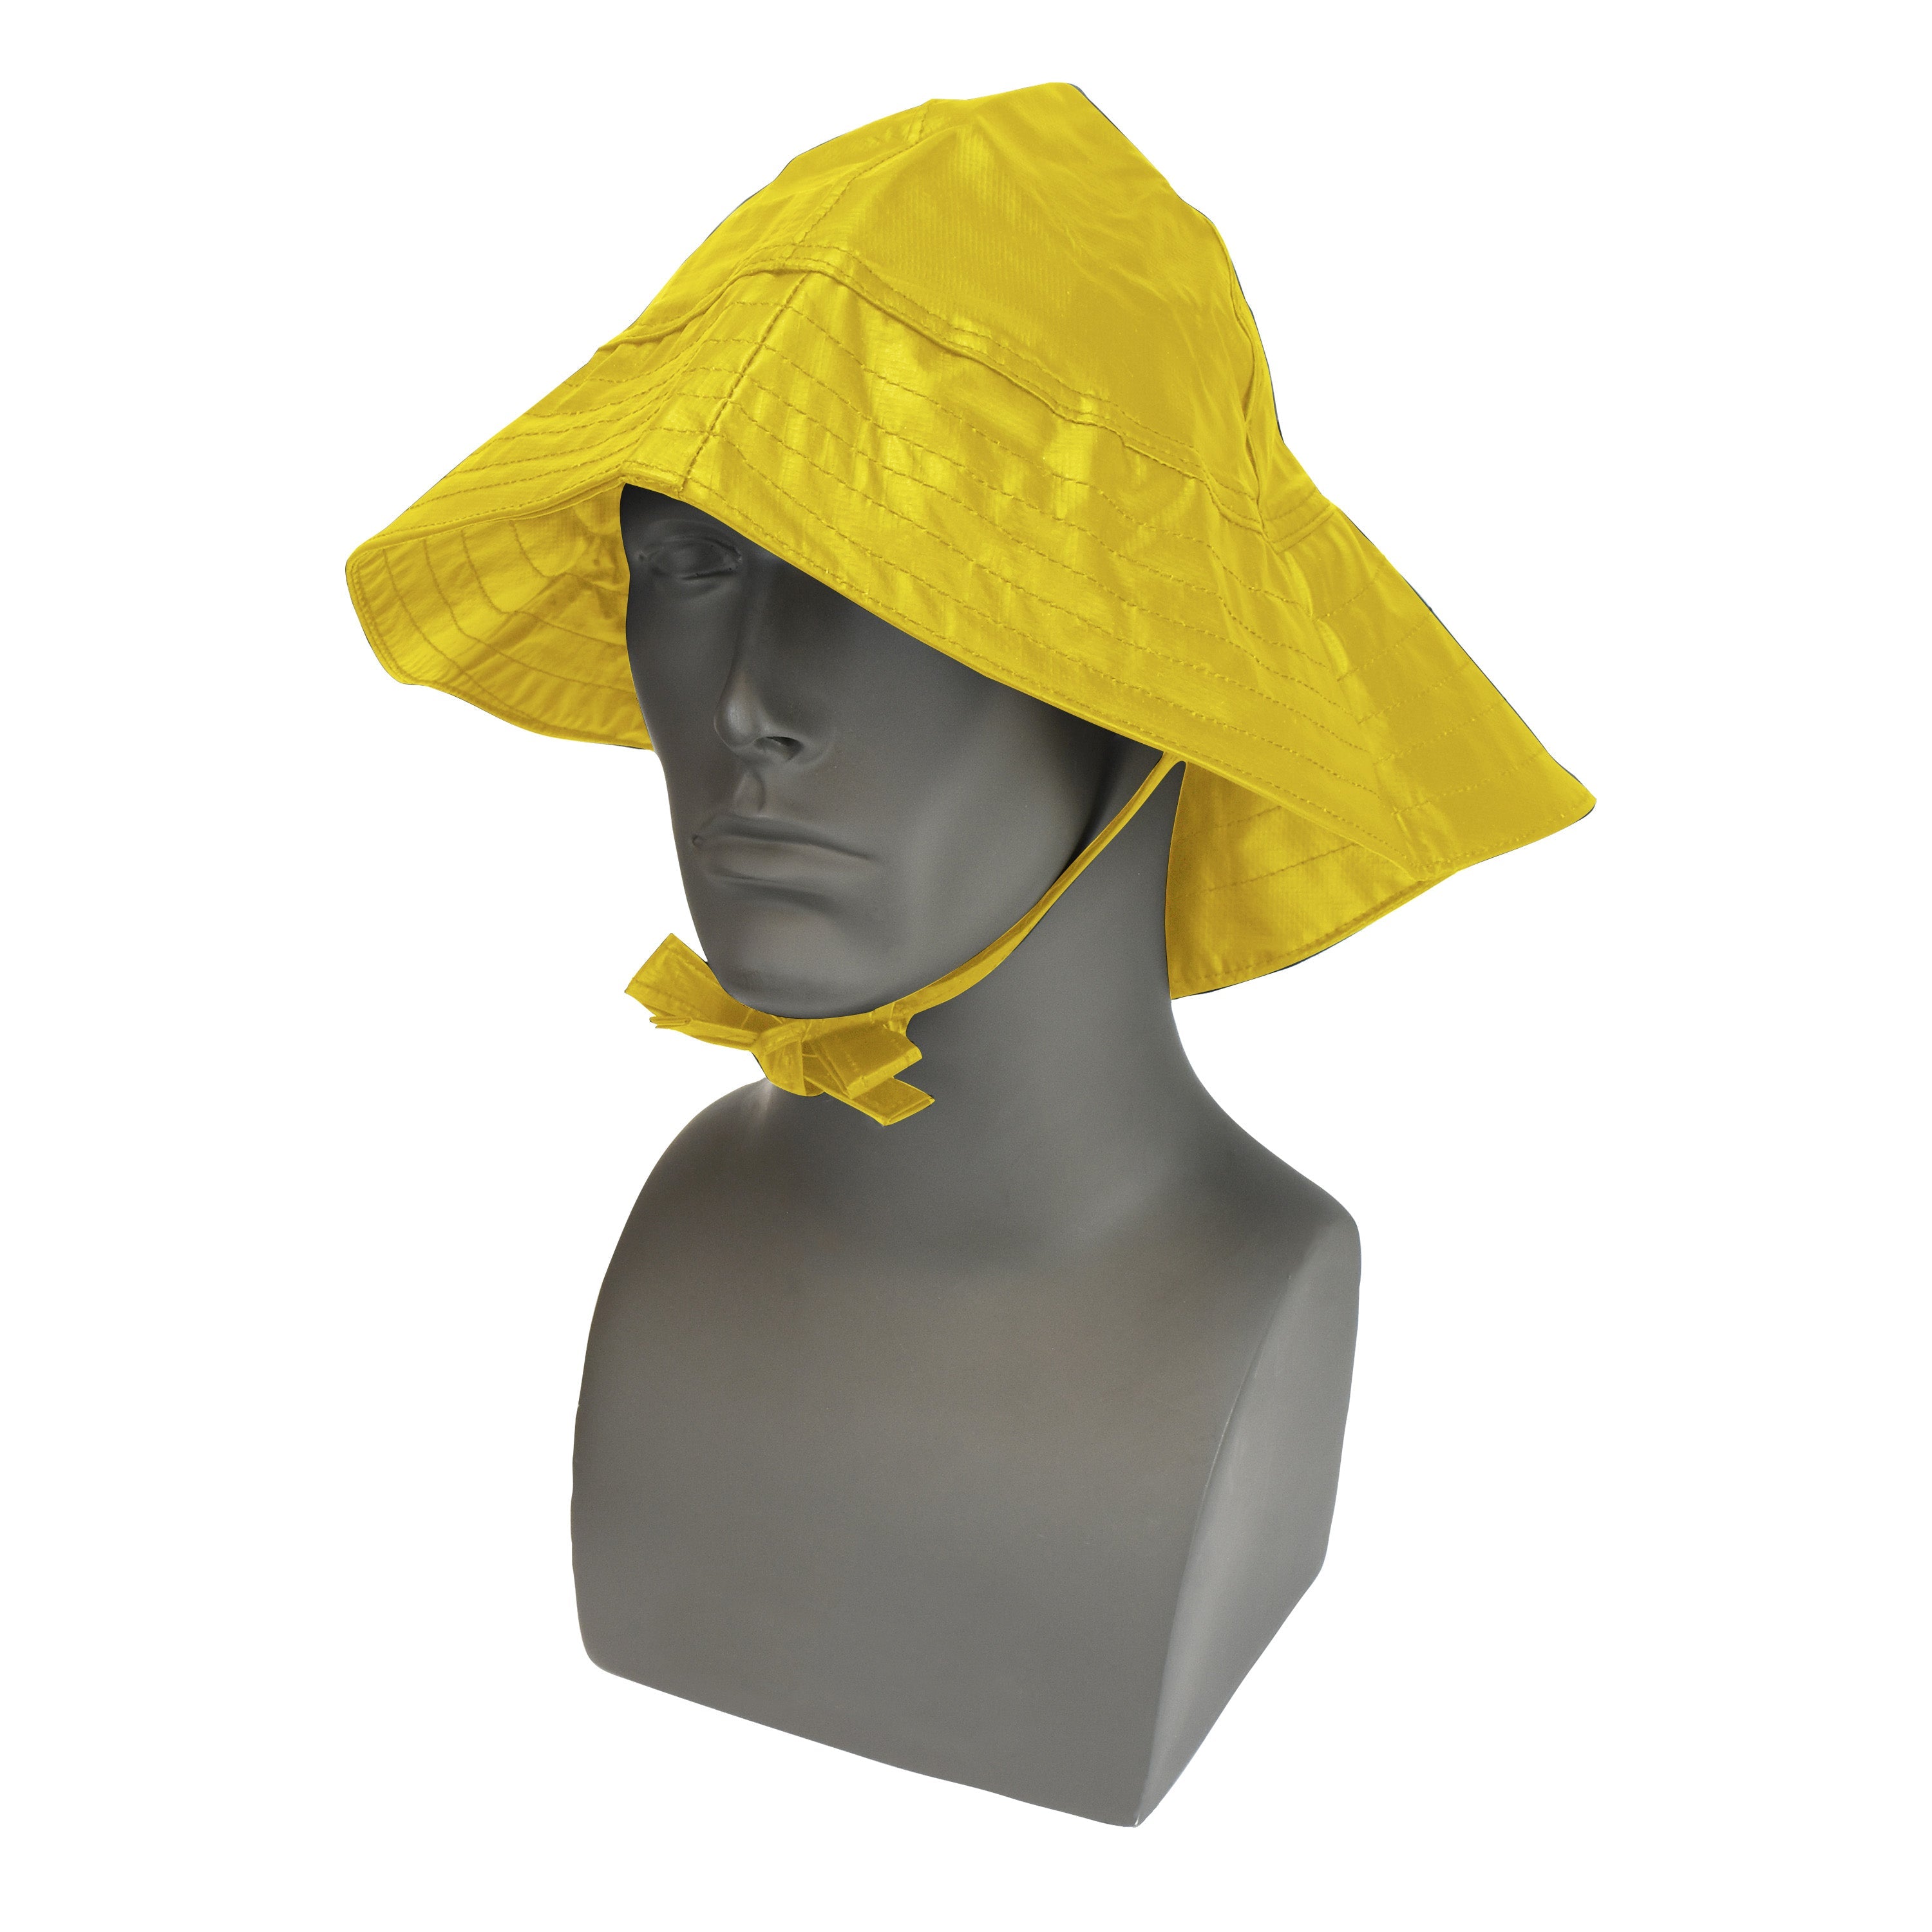 Neese 35HA Universal Hat - Safety Yellow - Size U